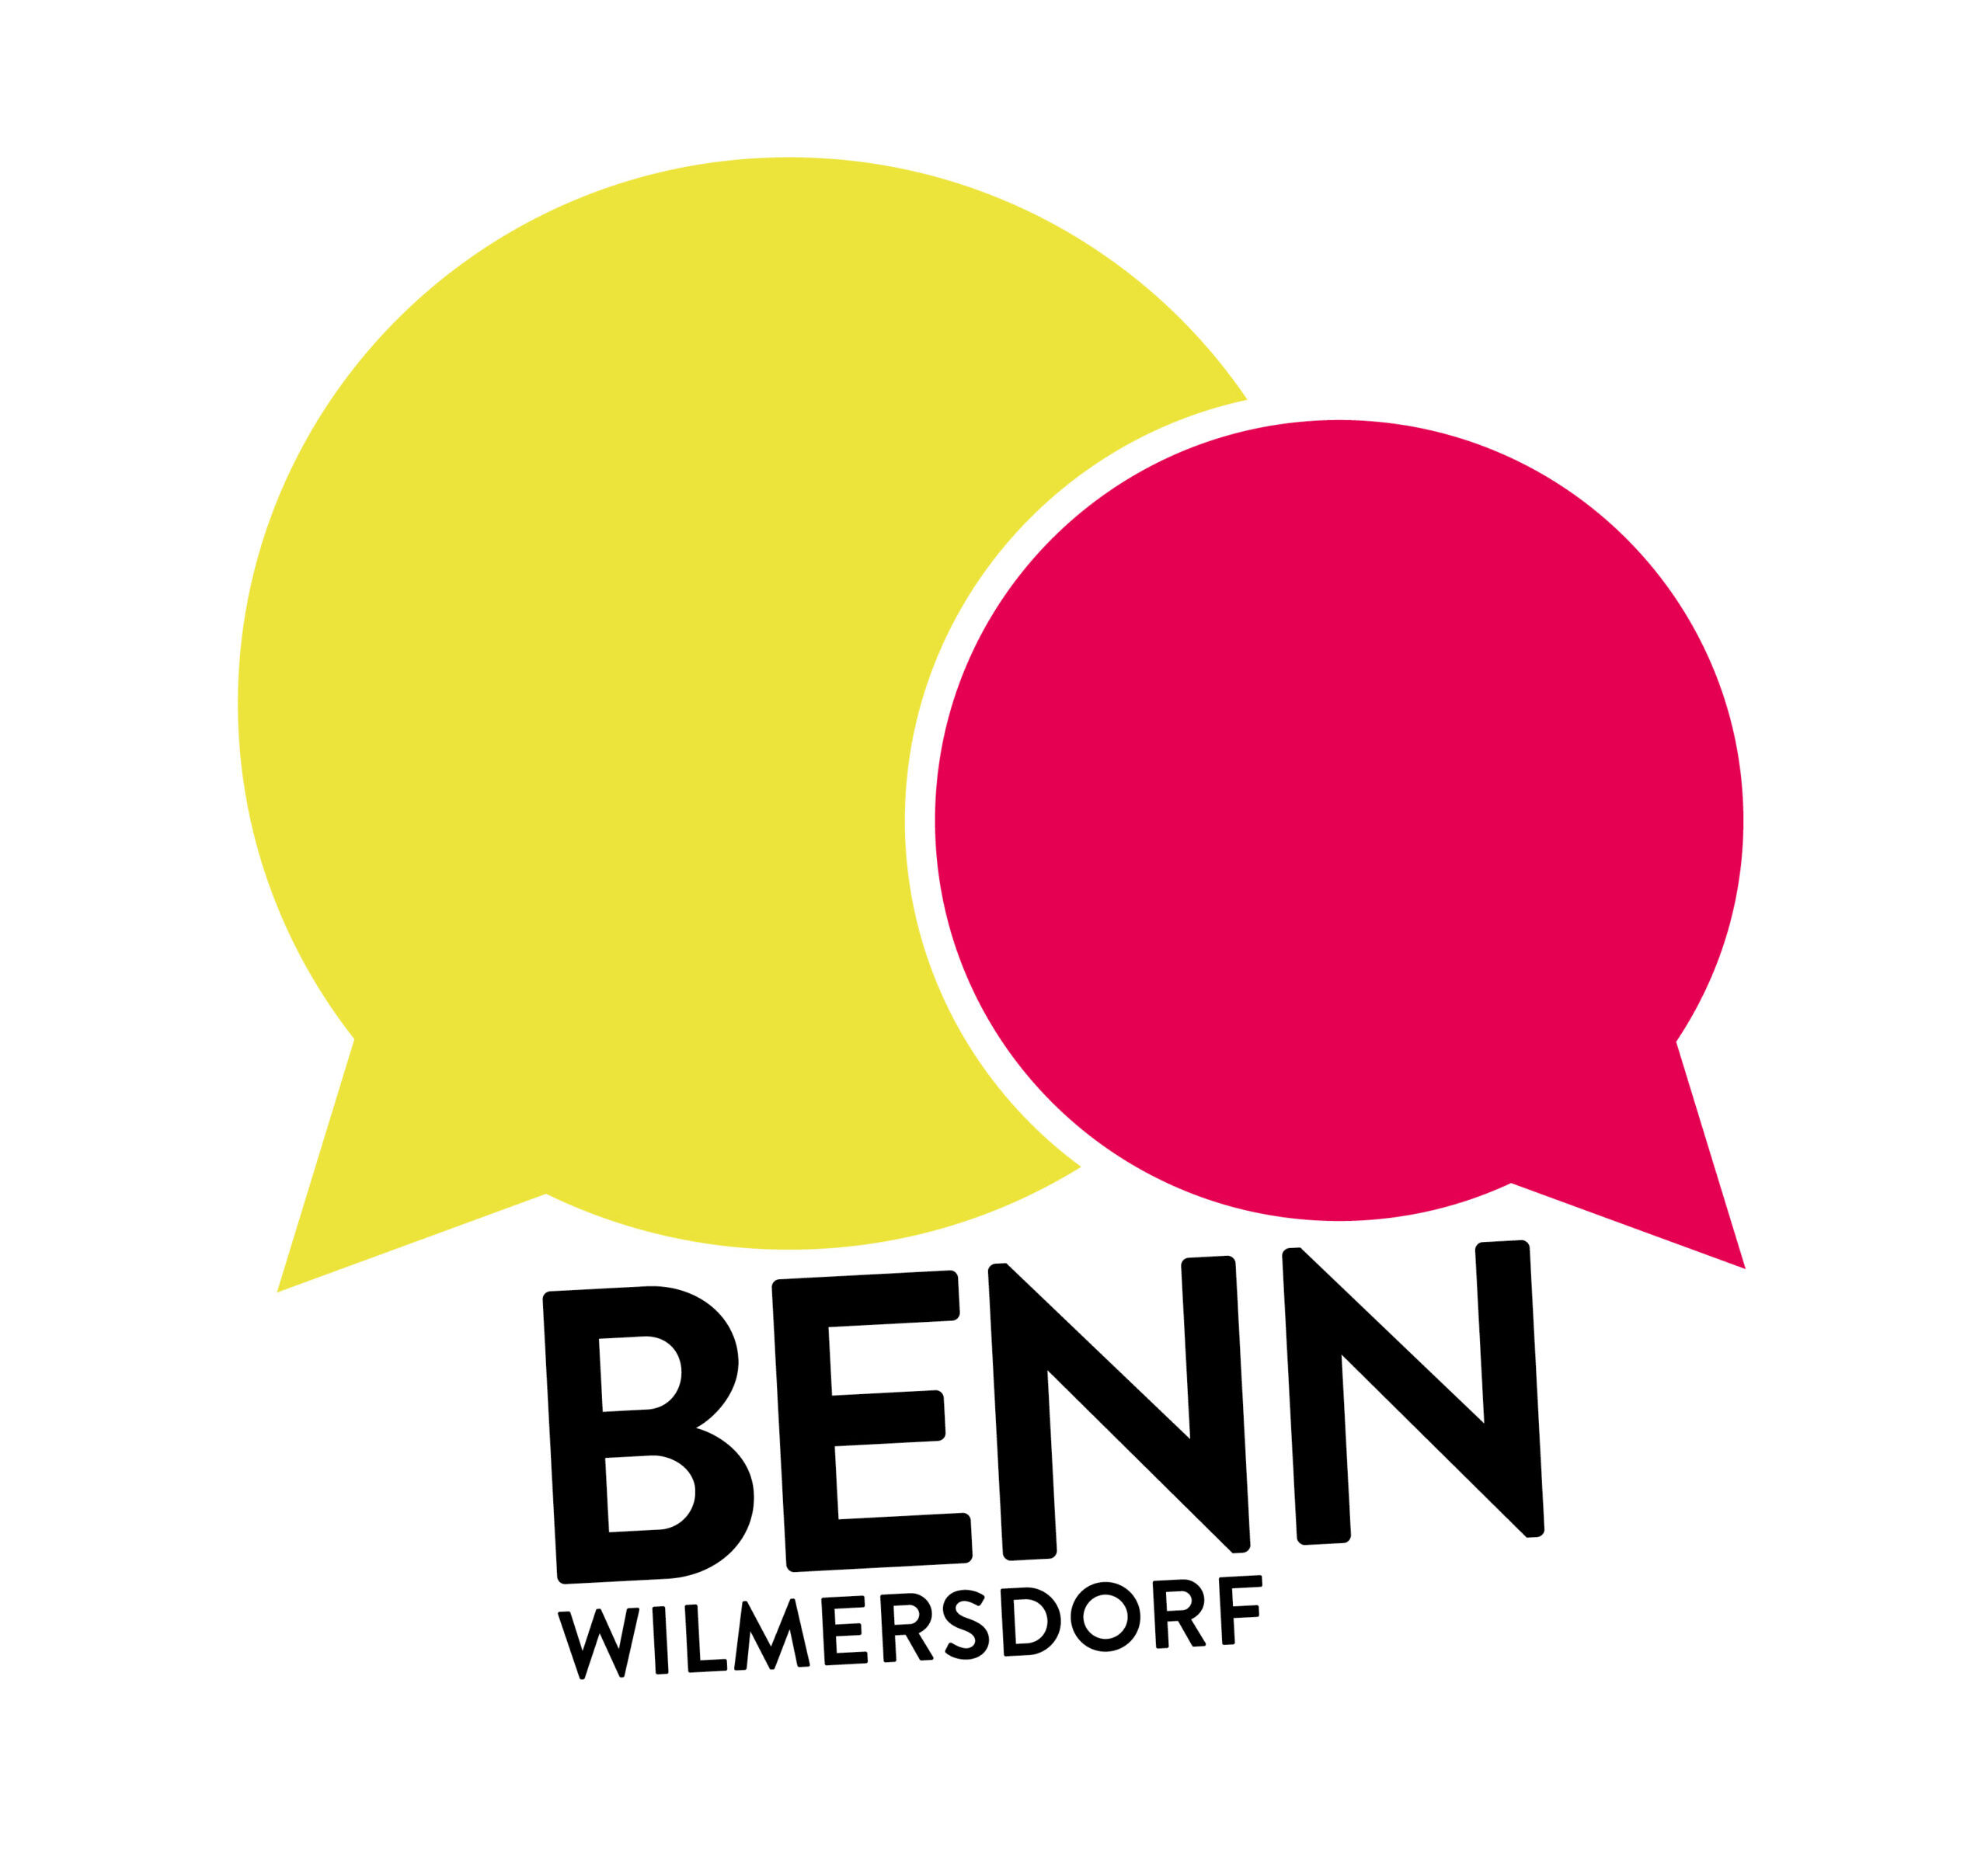 BENN Wilmersdorf